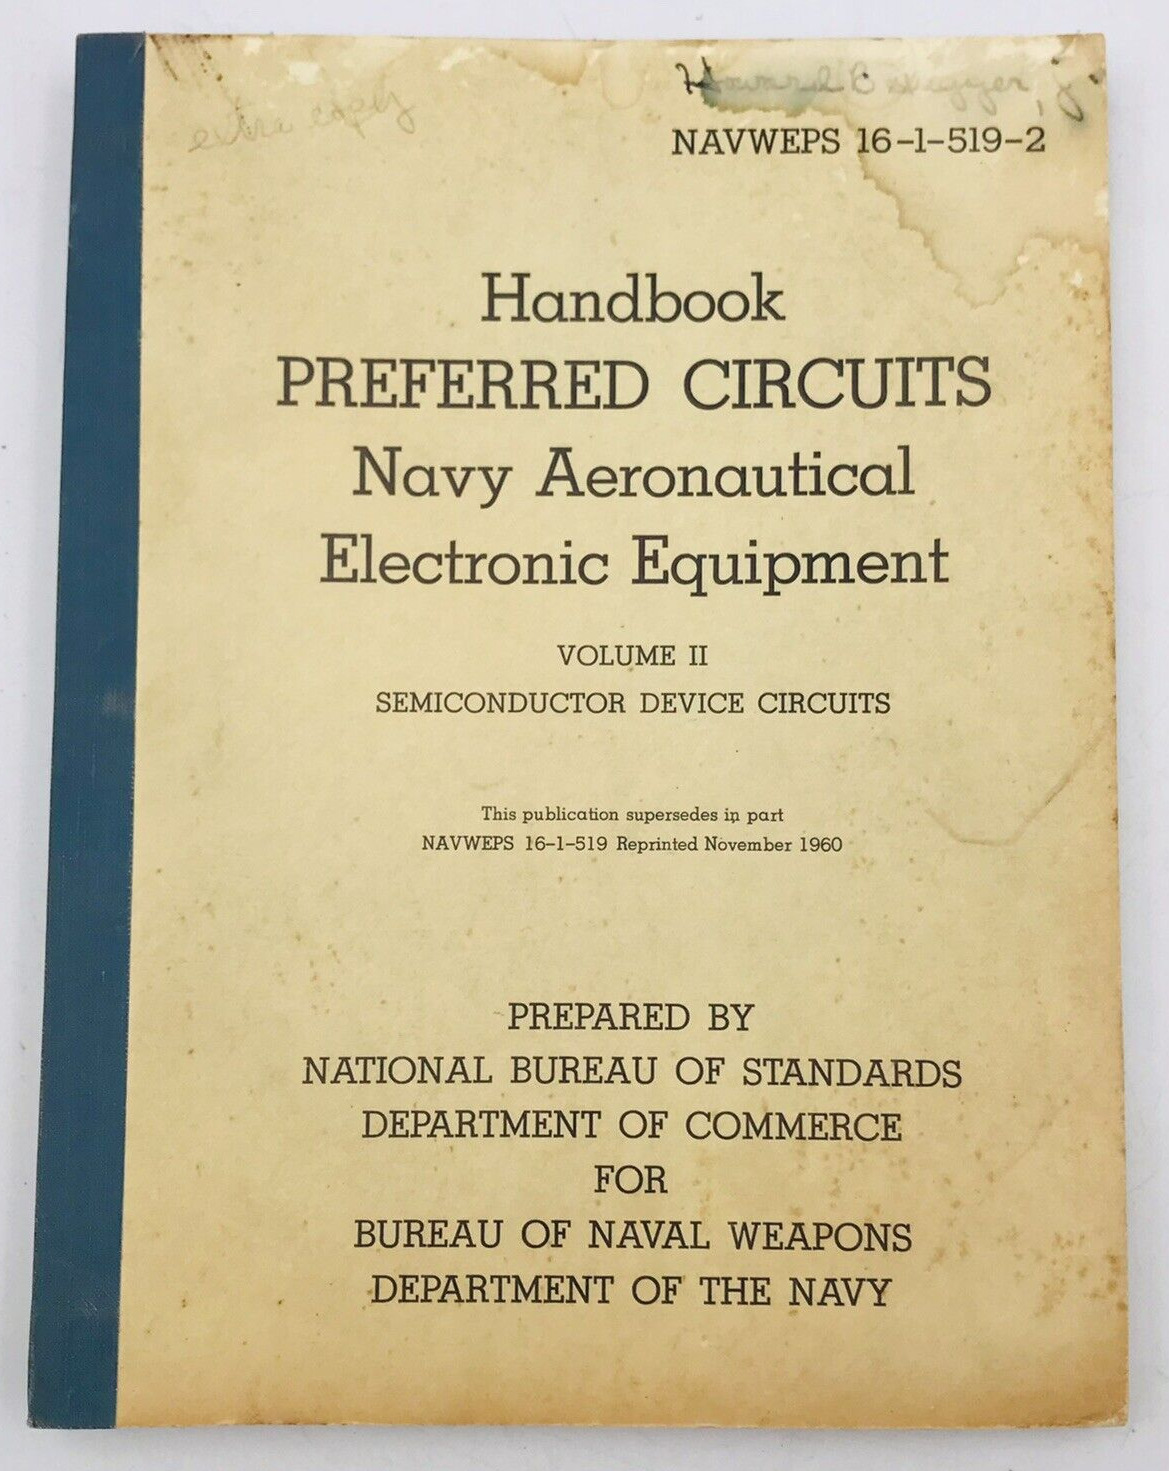 April 1962 Preferred Circuits Navy Aeronautical Electronic Equipment Handbook V2